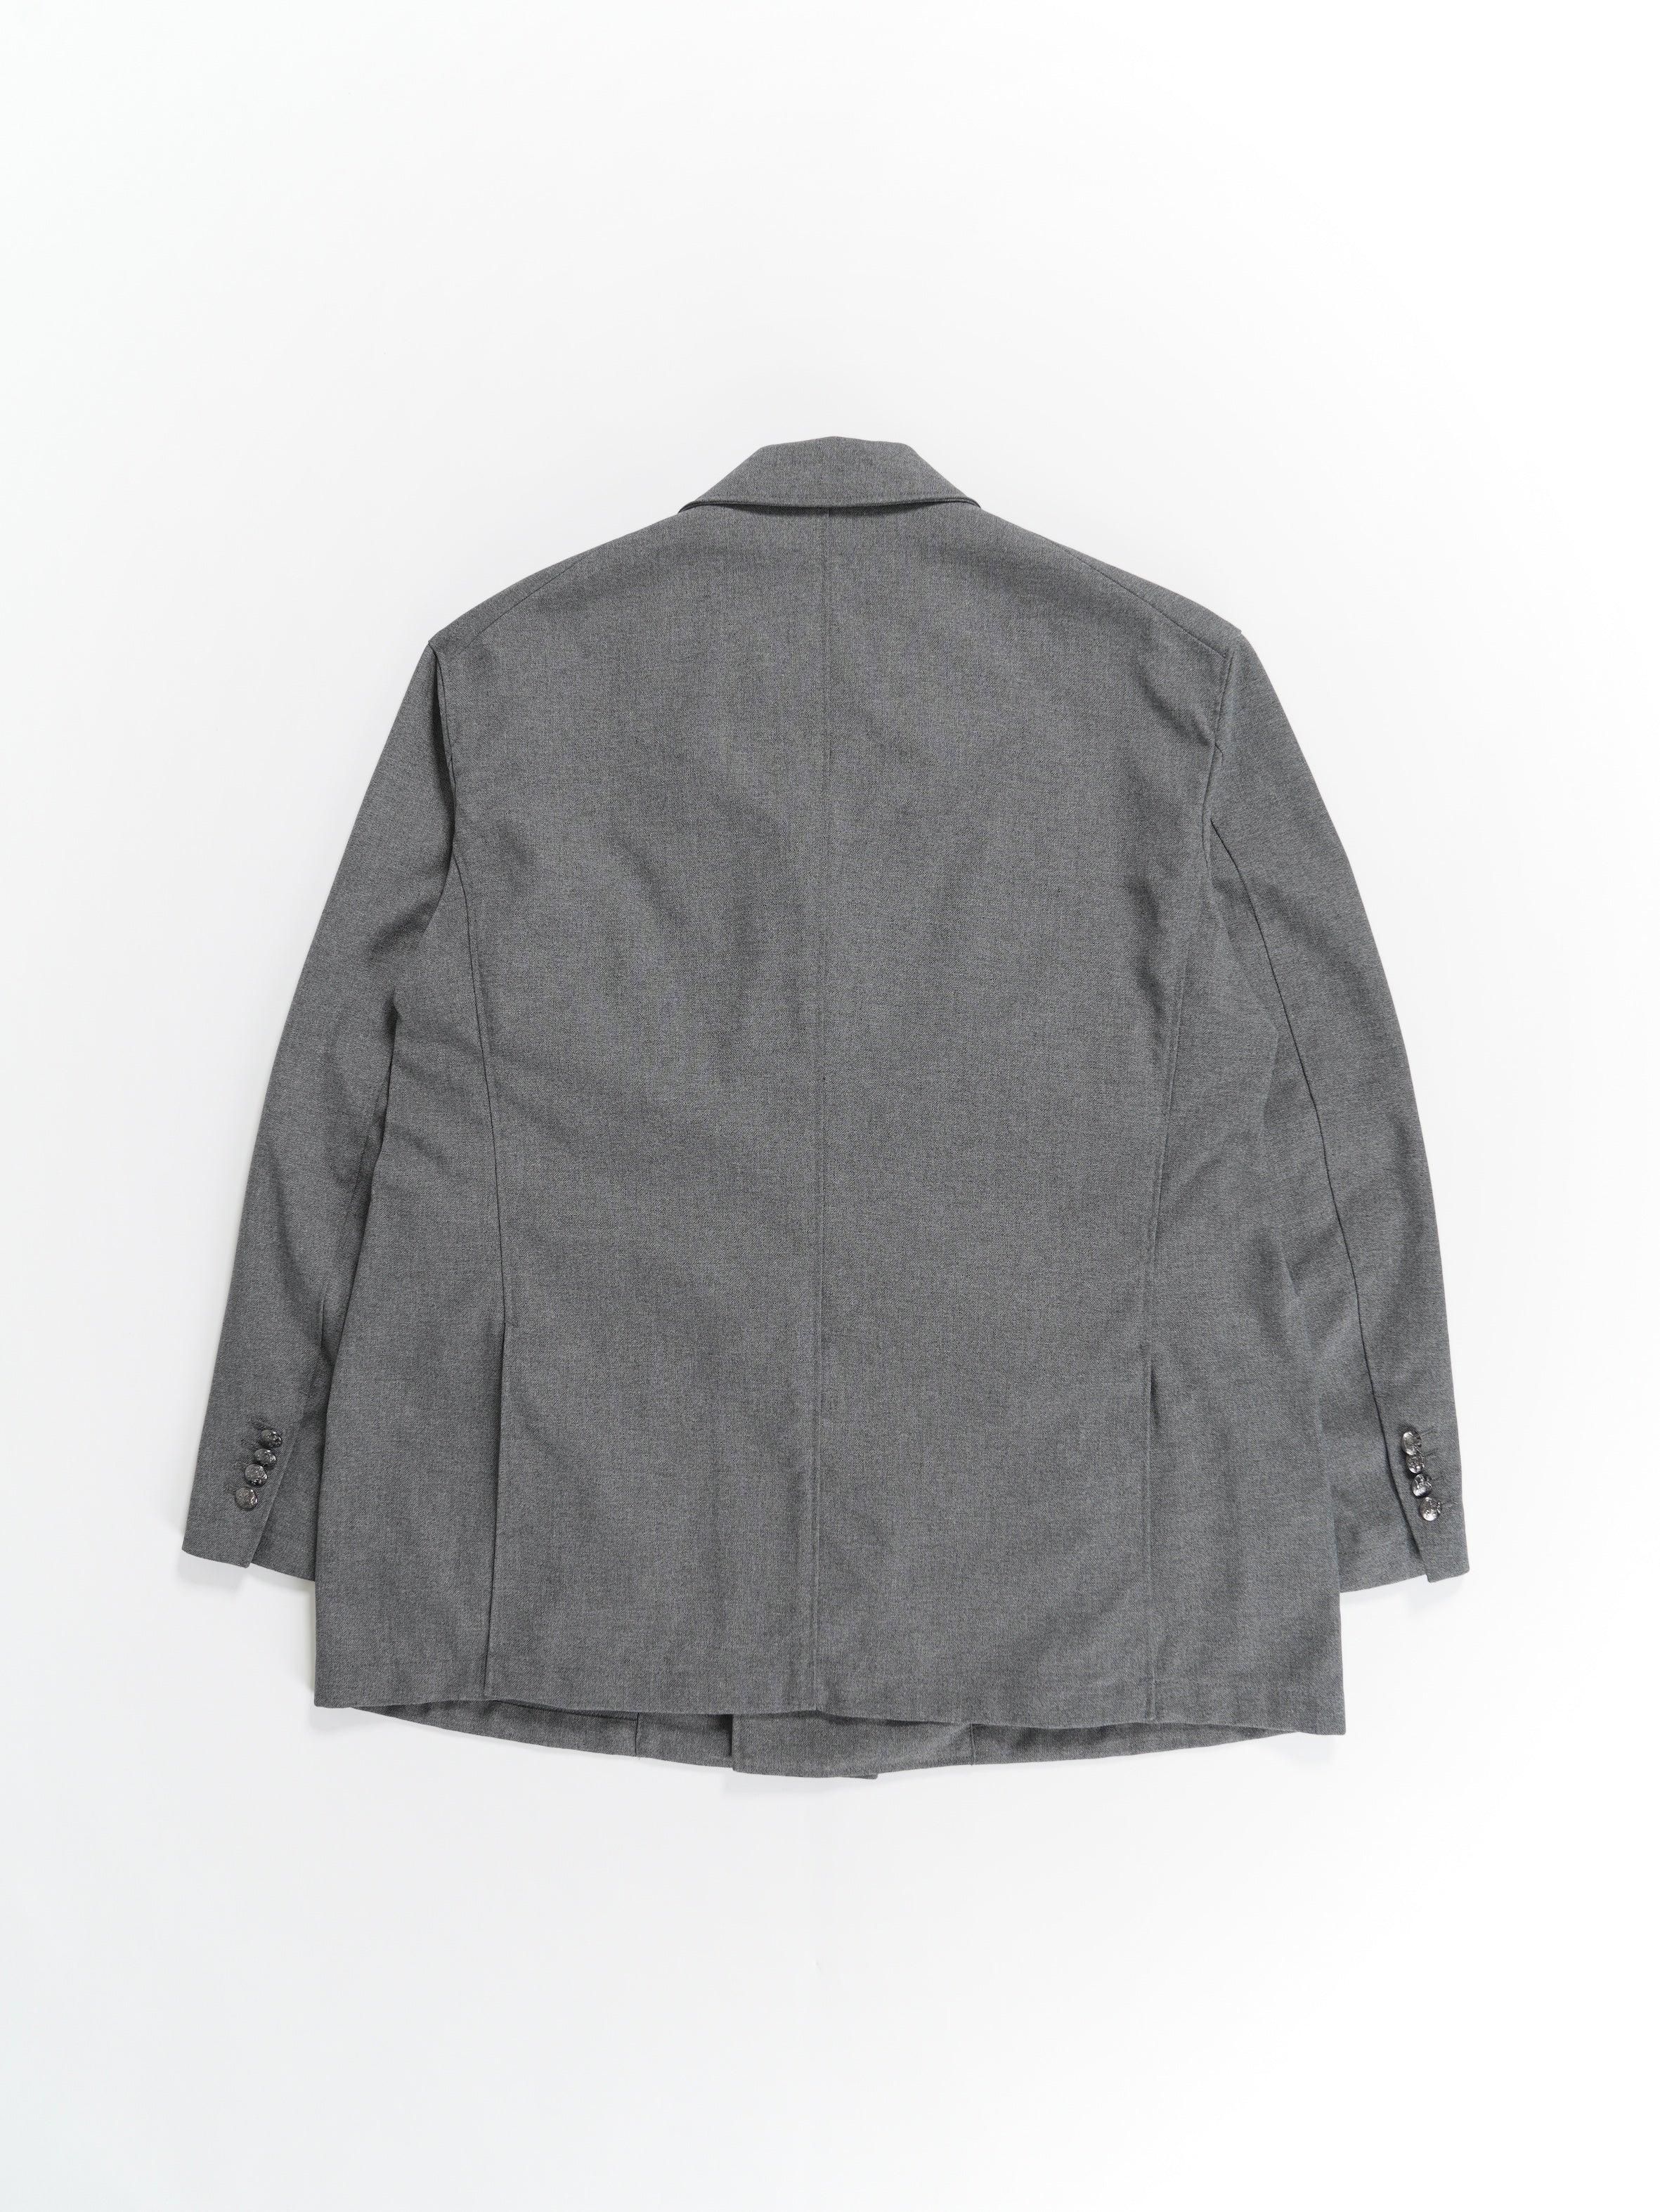 Engineered Garments Newport Jacket - Grey PC Hopsack